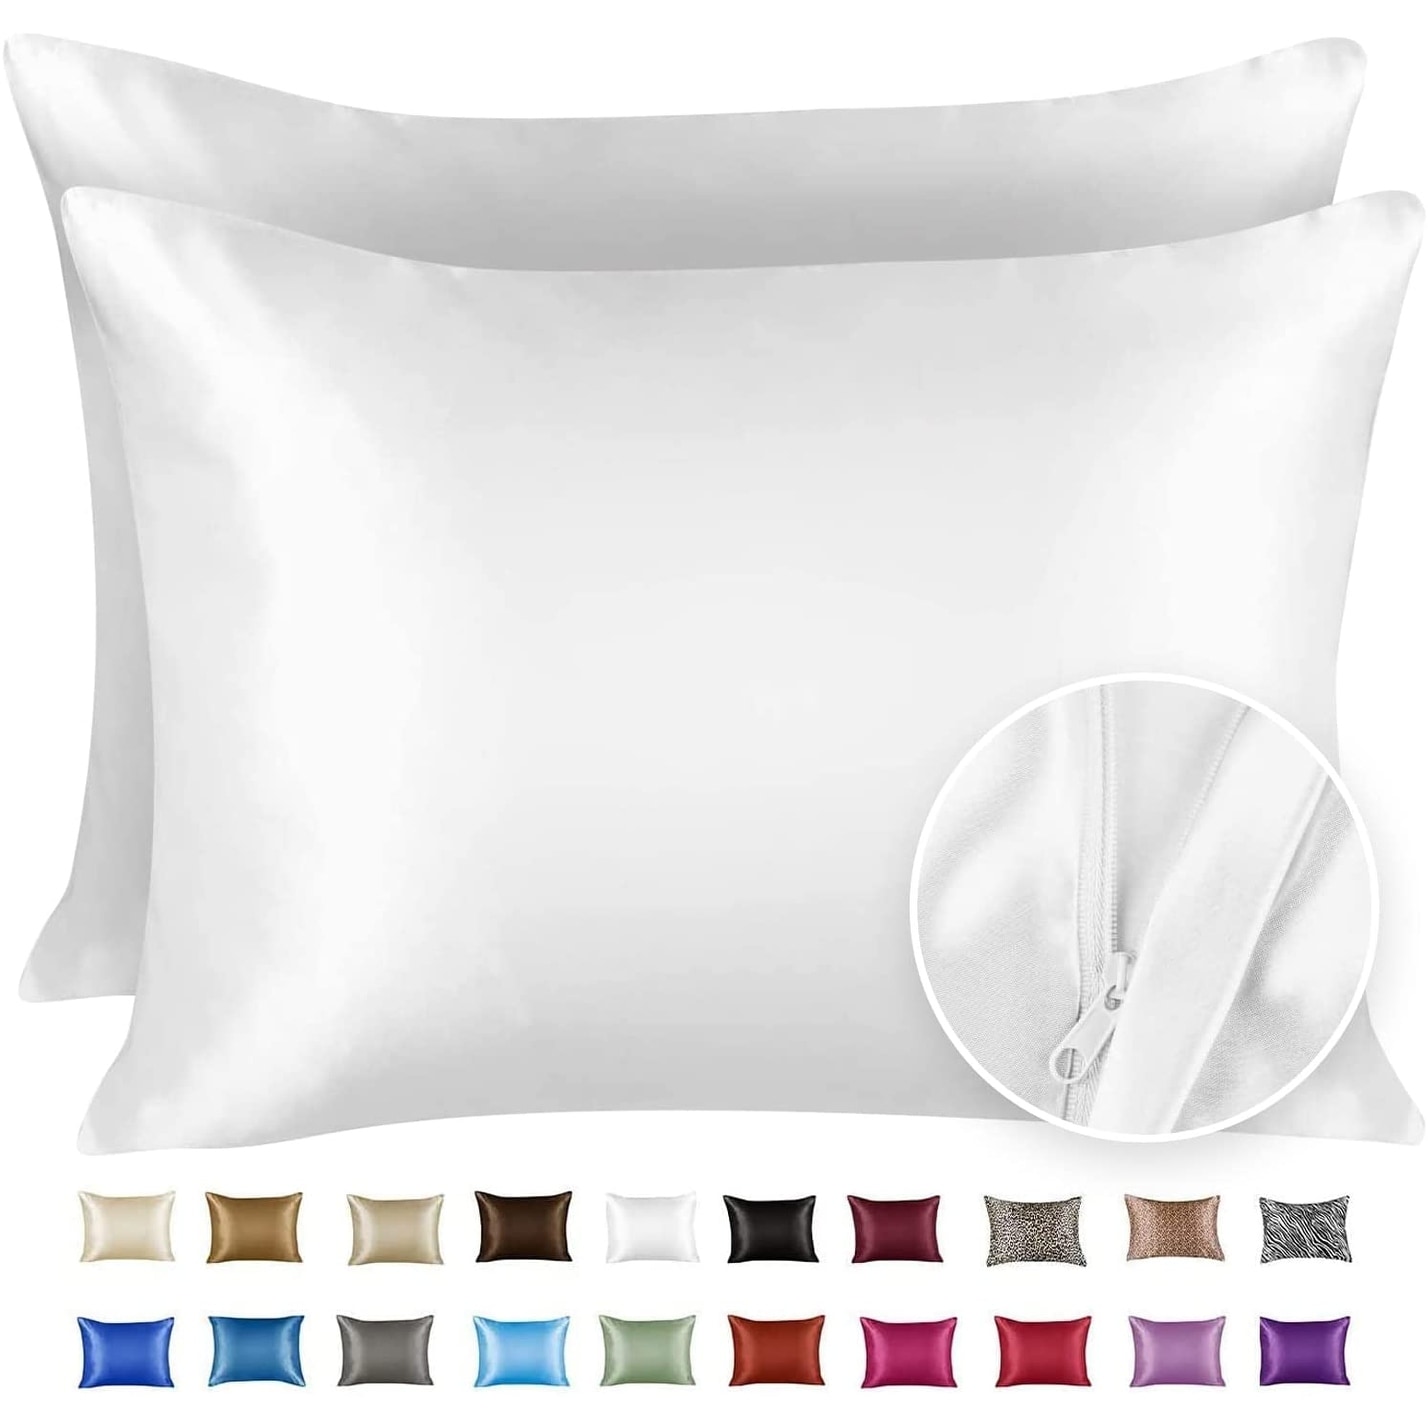 Satin Pillowcase for Hair and Skin with Hidden Zipper - Overstock - 18964425